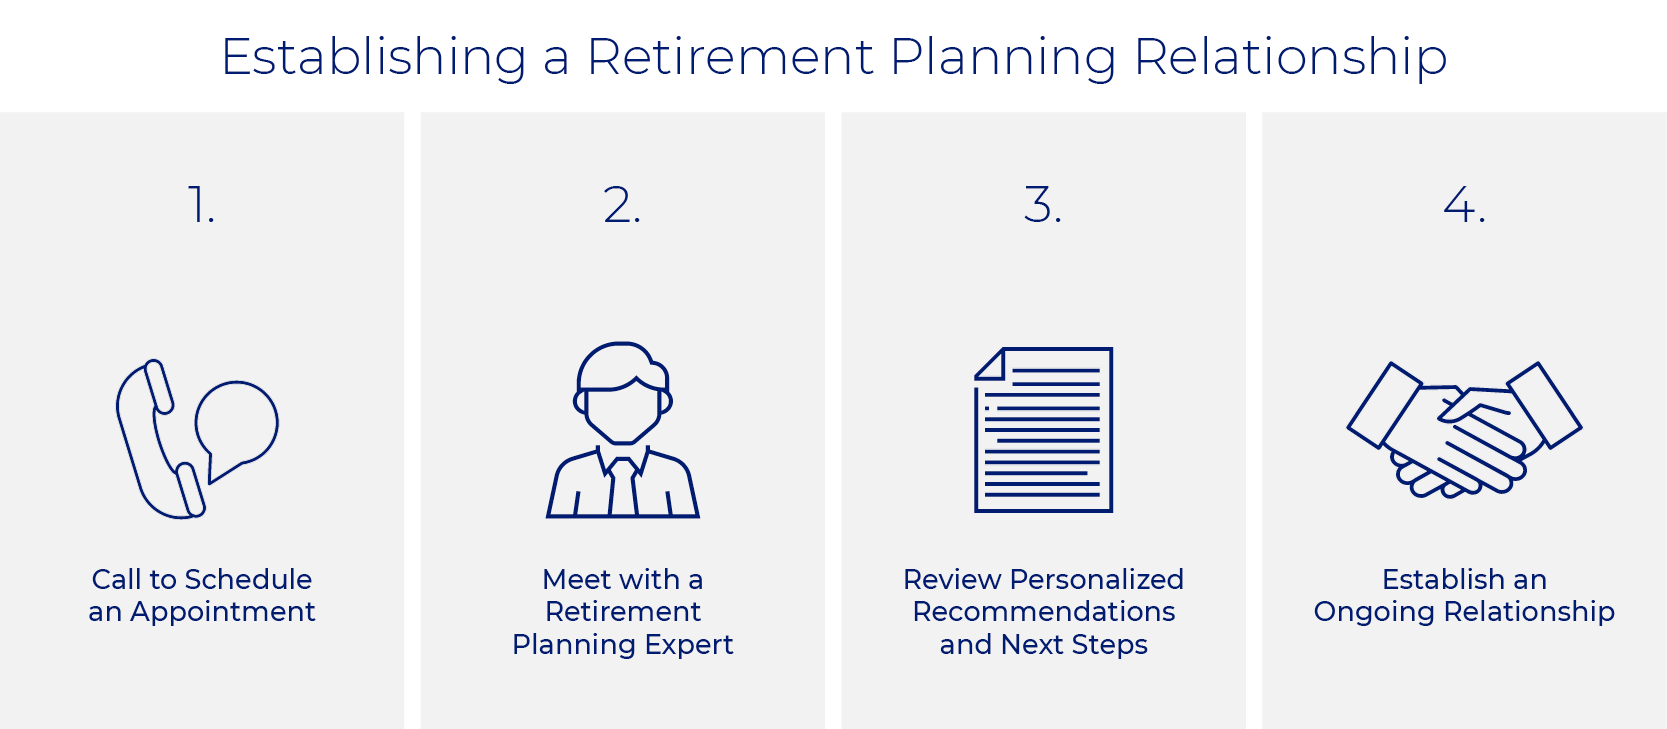 steps for a retirement planning relationship